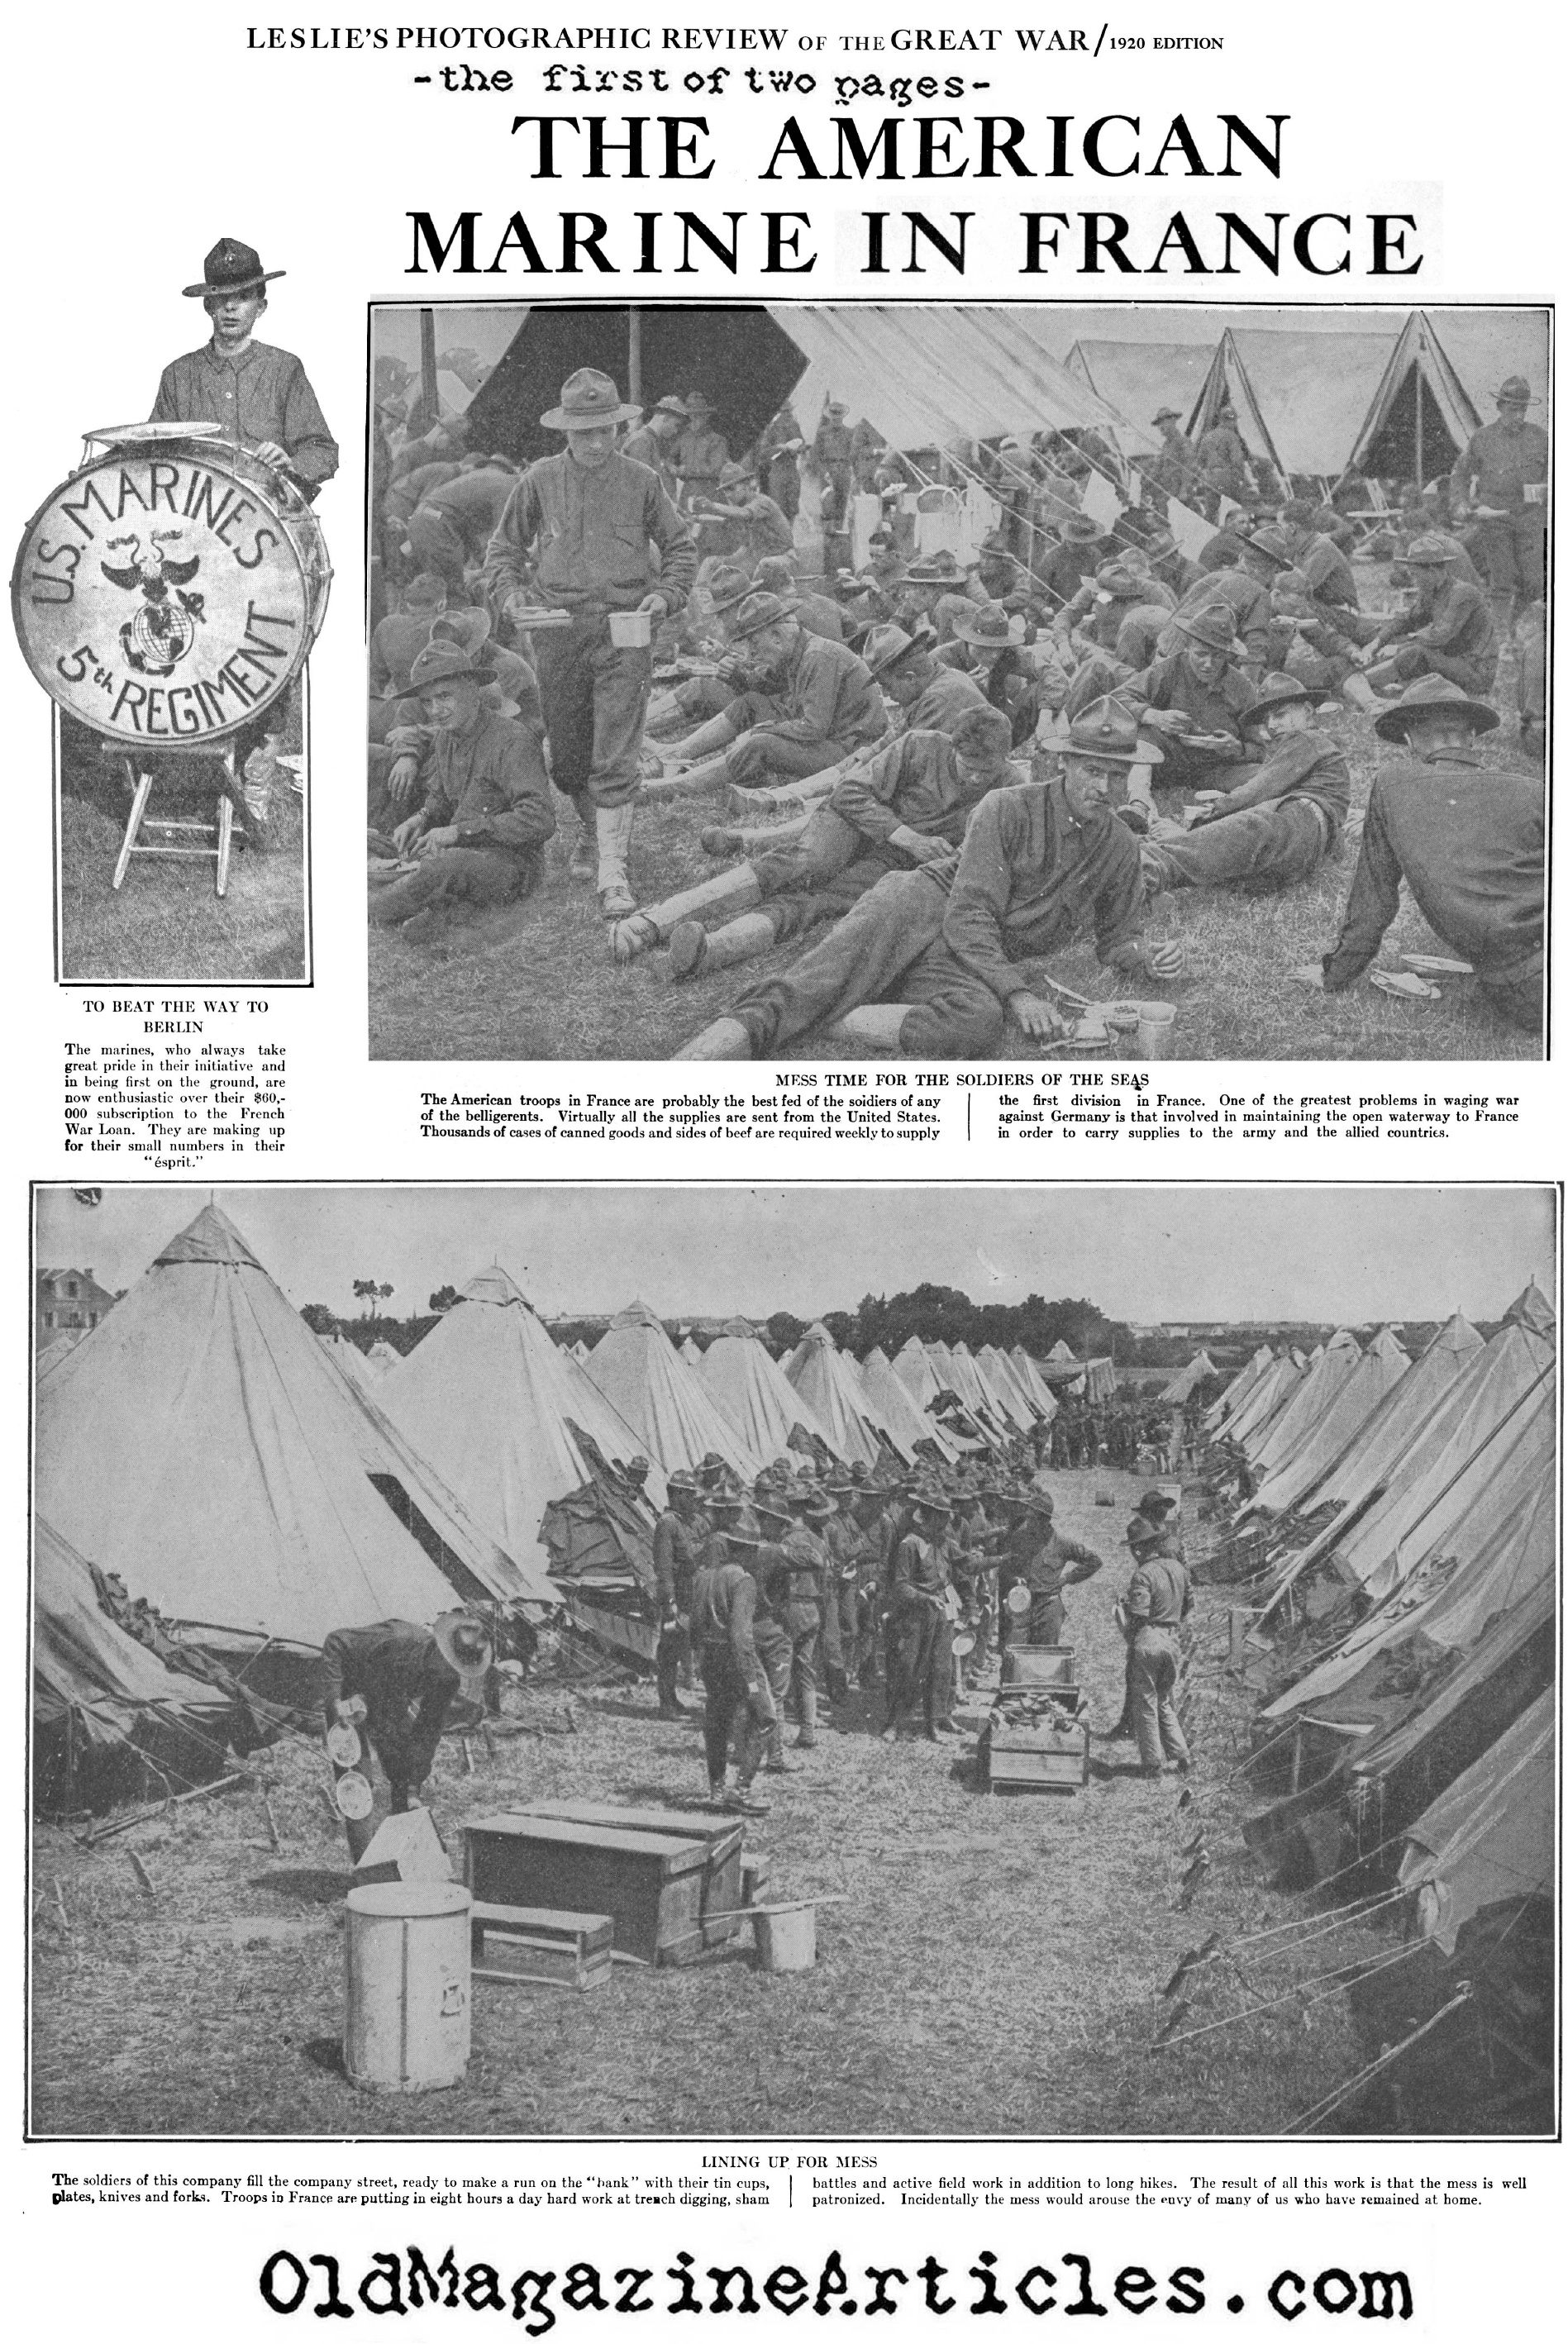 The American Marine in France (Leslie's Weekly, 1920)